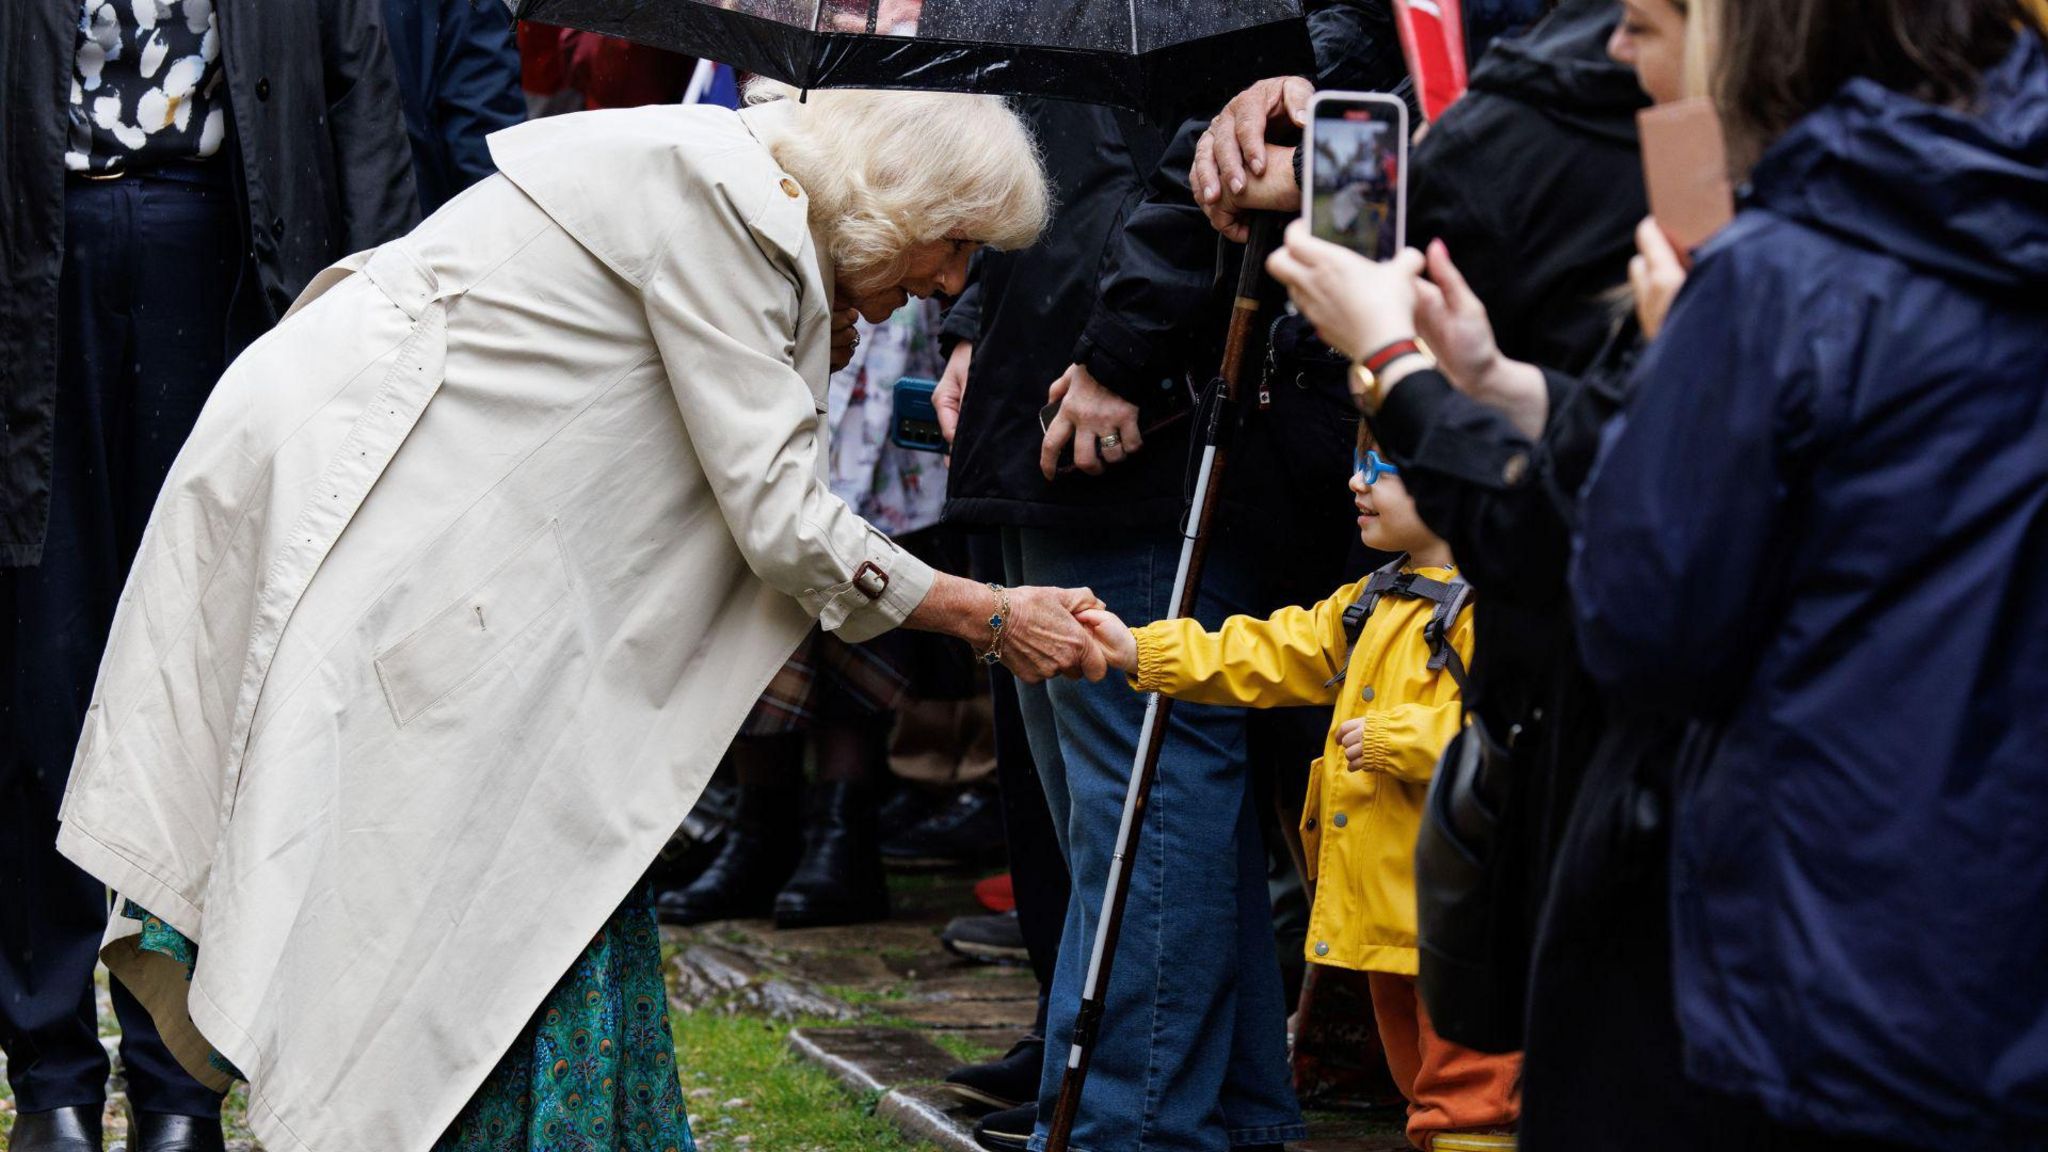 Queen Camilla meeting a young boy in a yellow rain coat